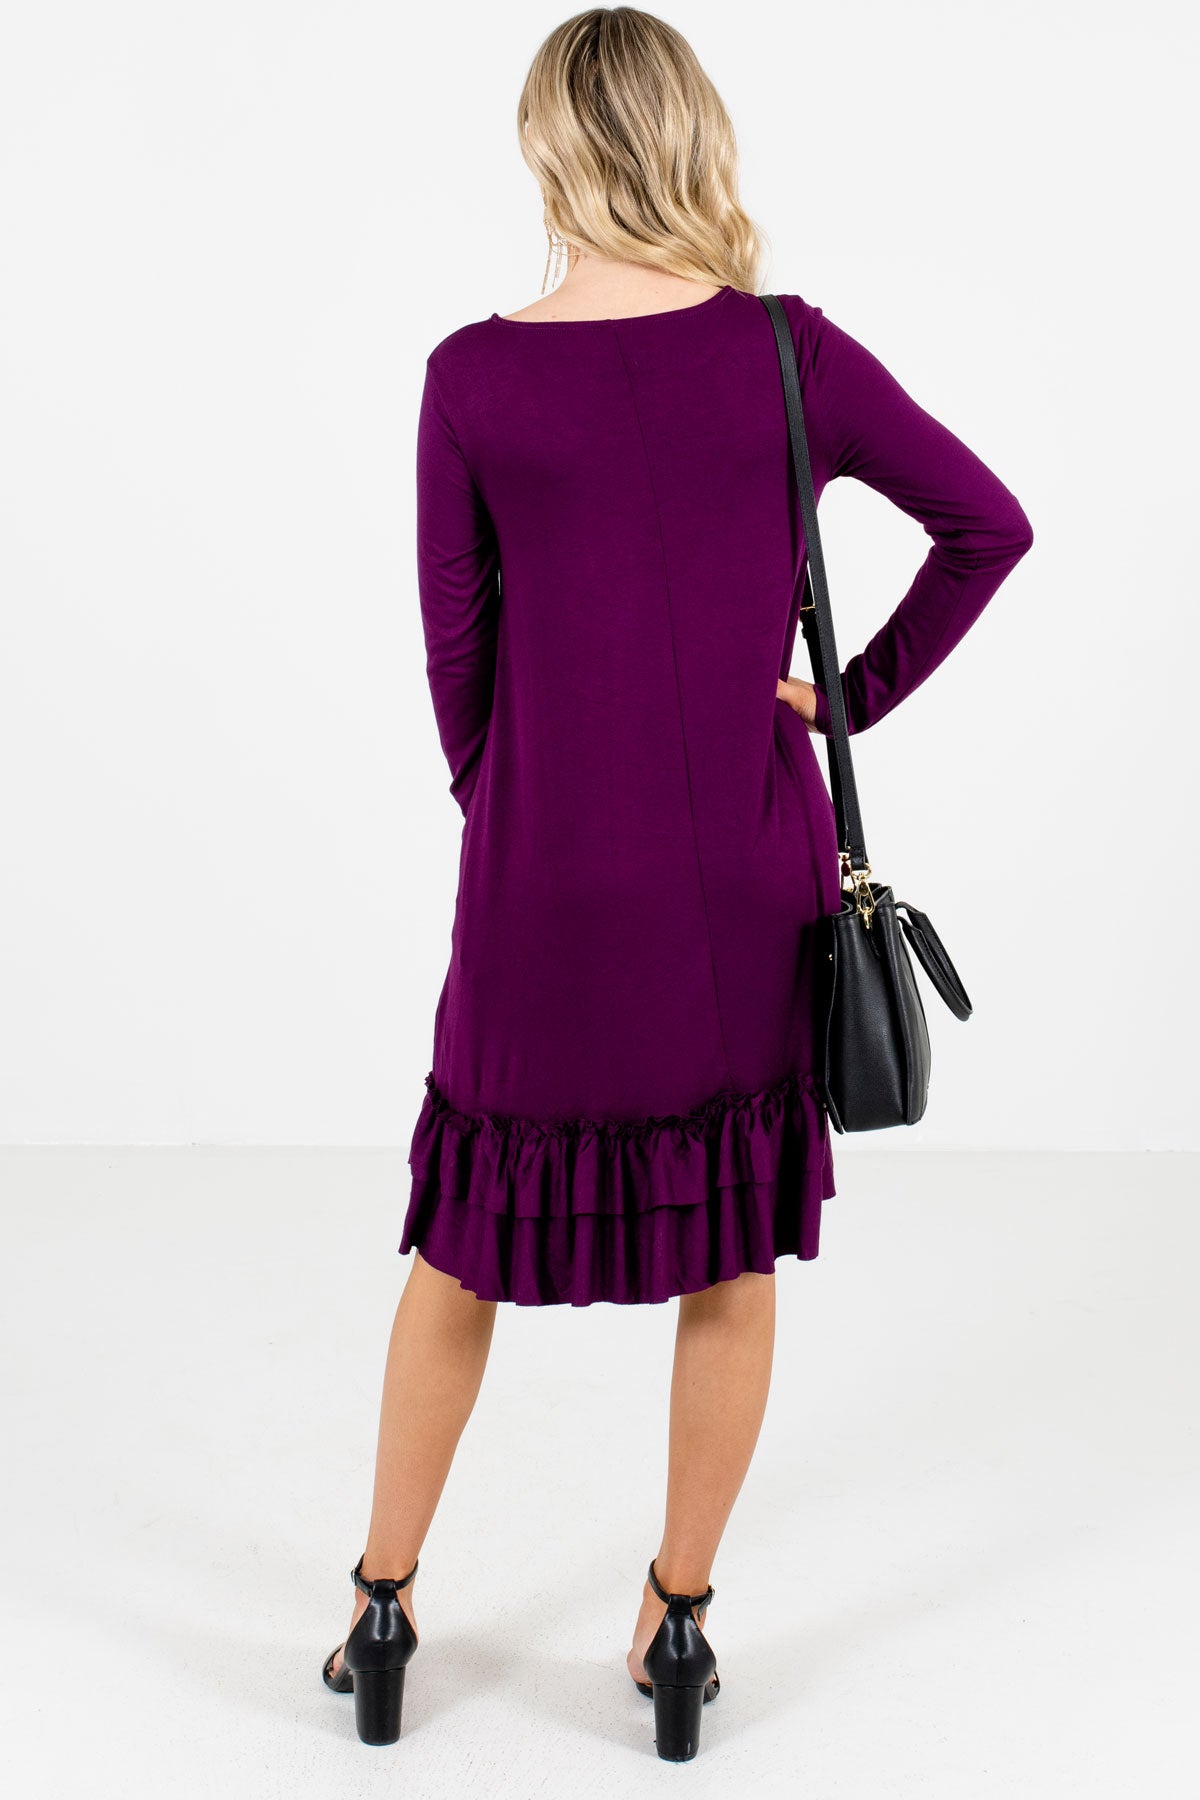 Women's Purple Long Sleeve Boutique Knee-Length Dress